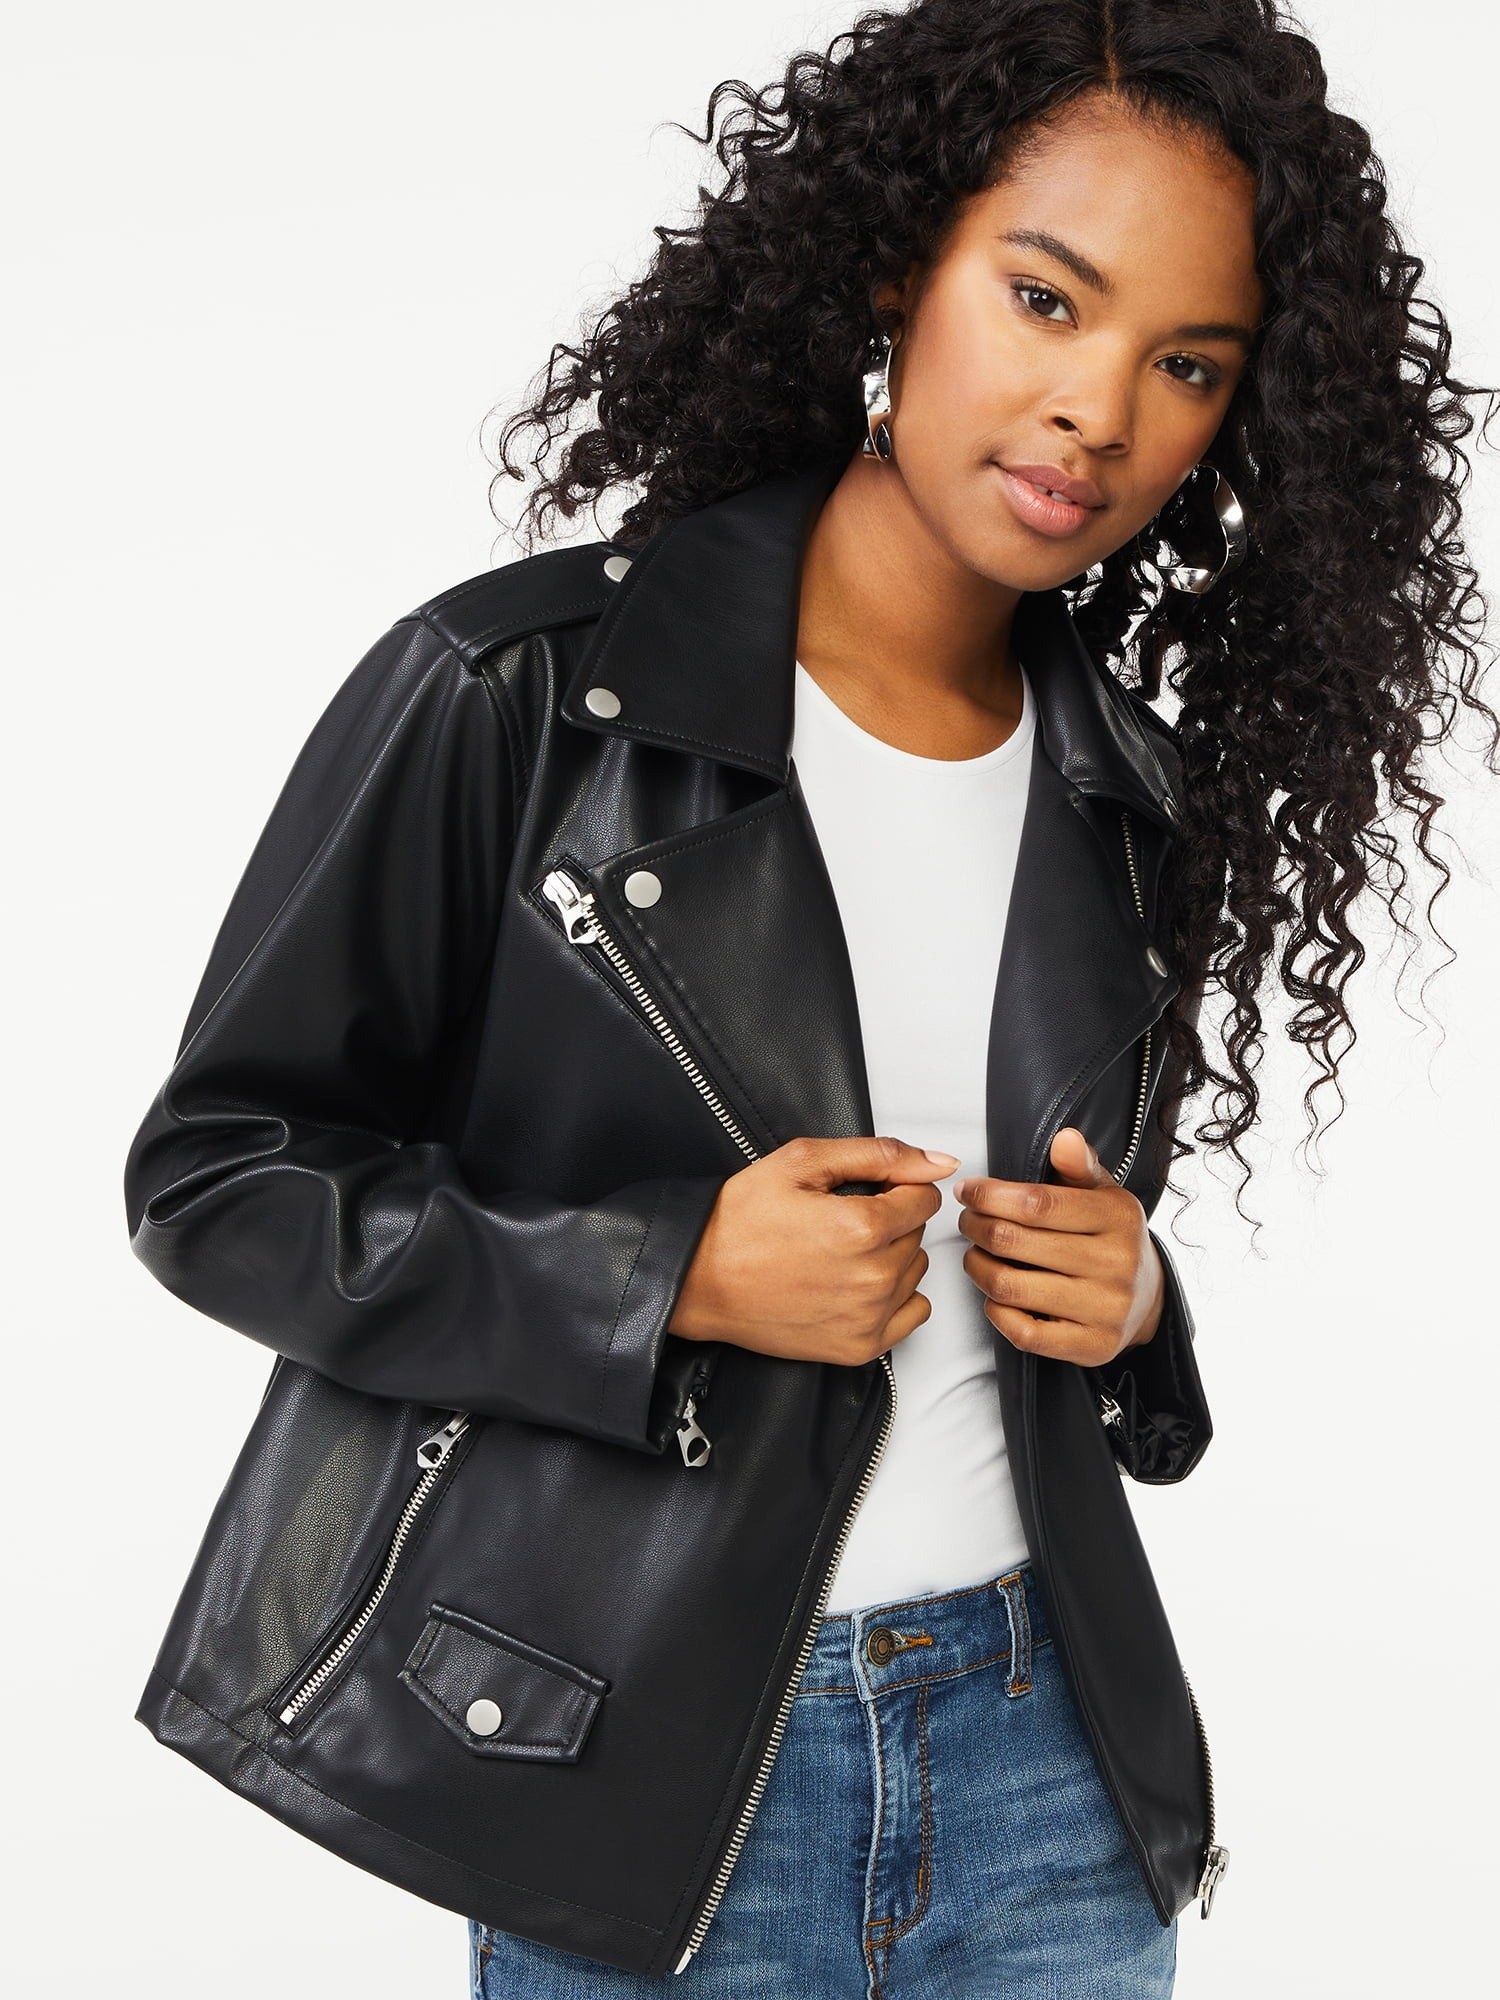 a model wearing the black jacket